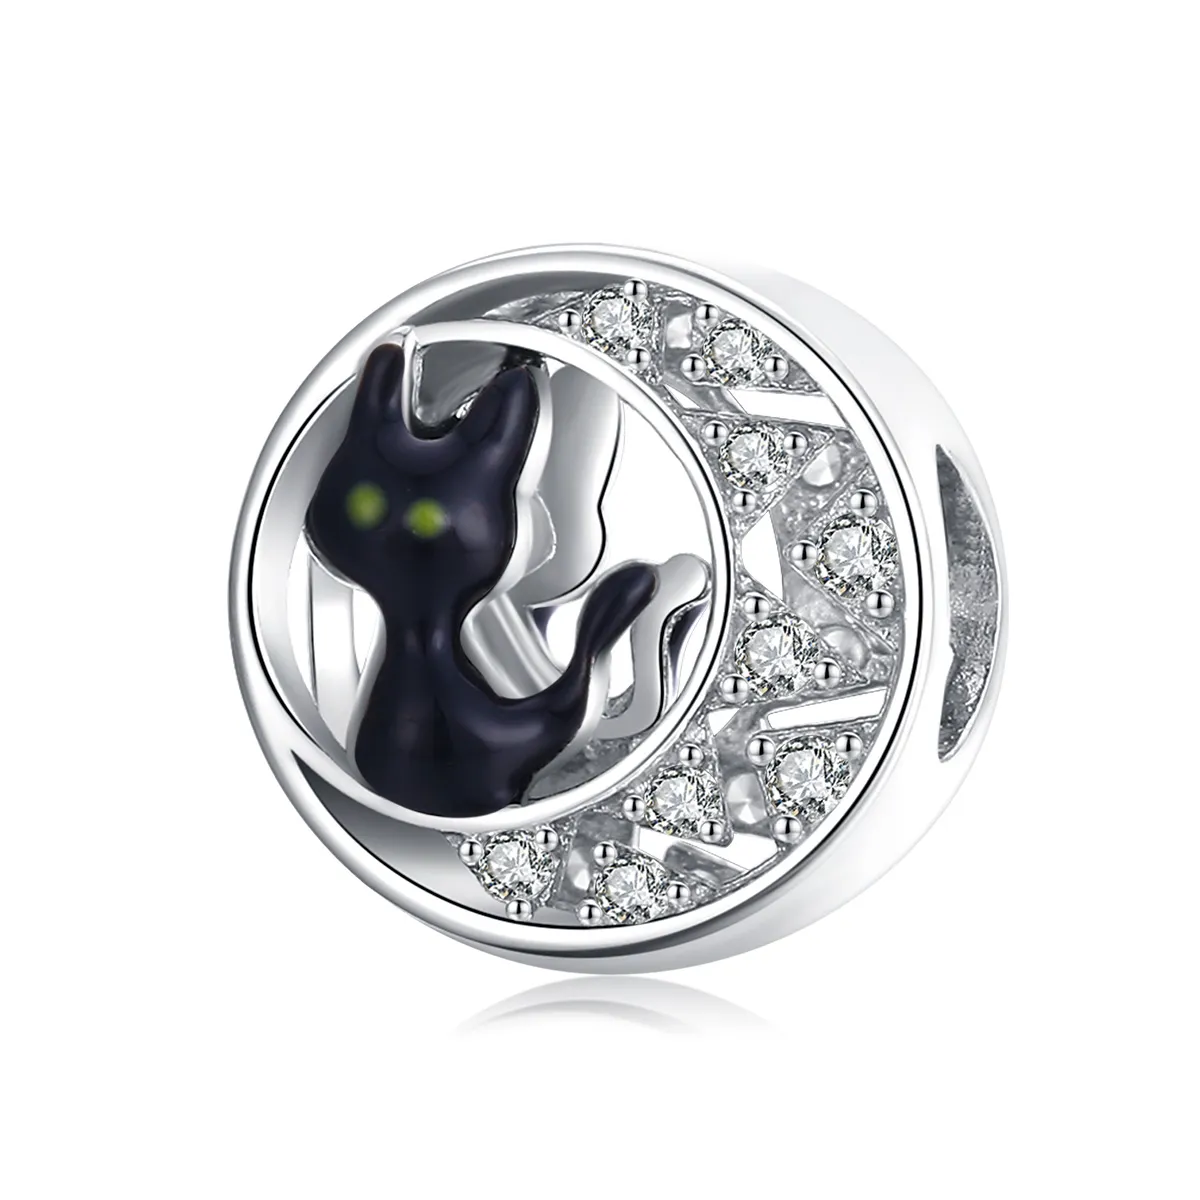 Pandora Style Silver Halloween Black Cat Charm - BSC325